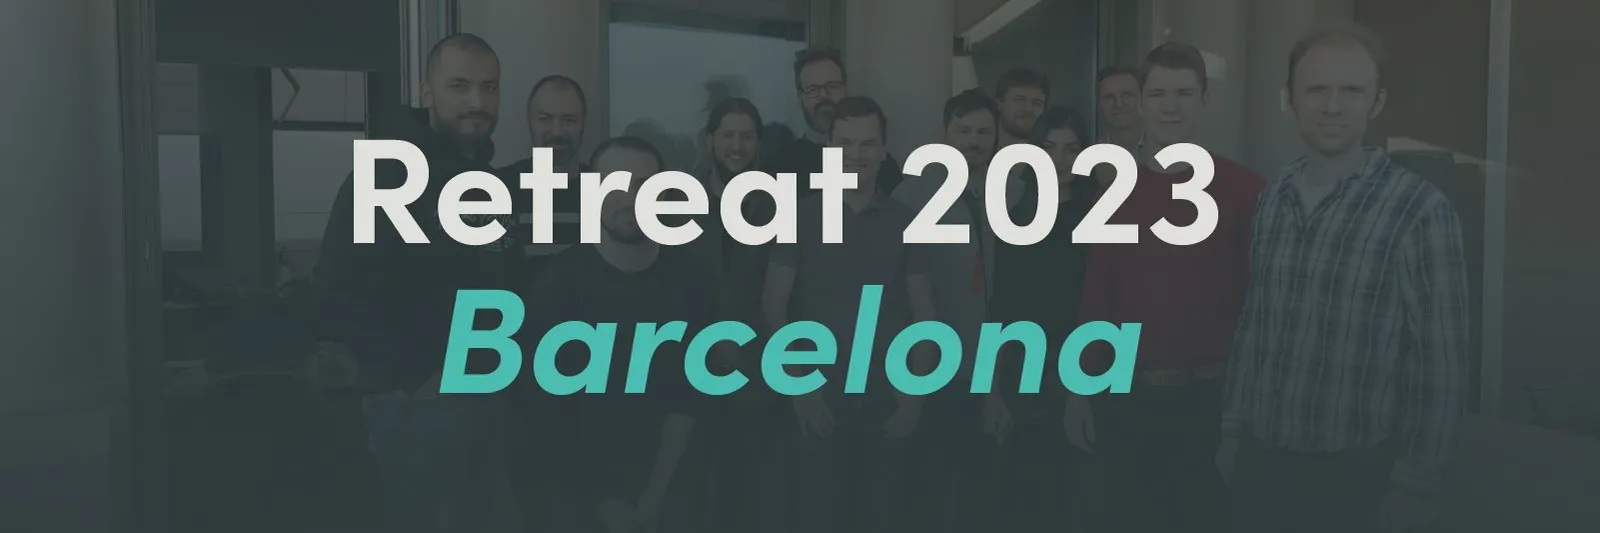 Retreat 2023-Barcelona